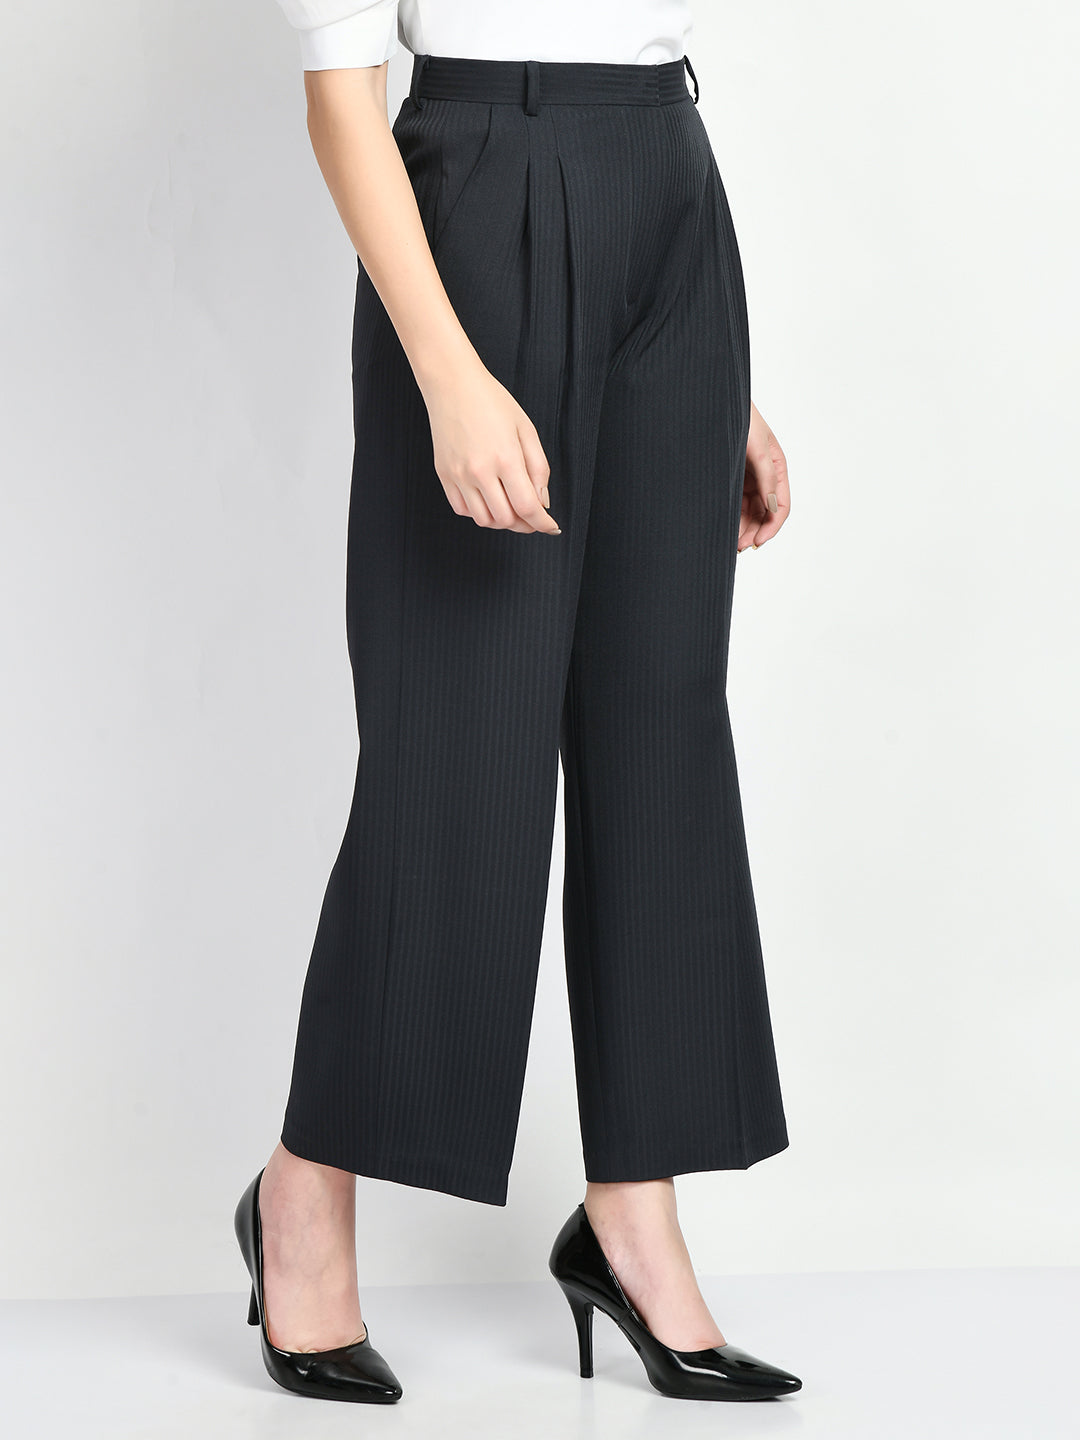 Buy Navy Blue Trousers  Pants for Women by FABALLEY Online  Ajiocom